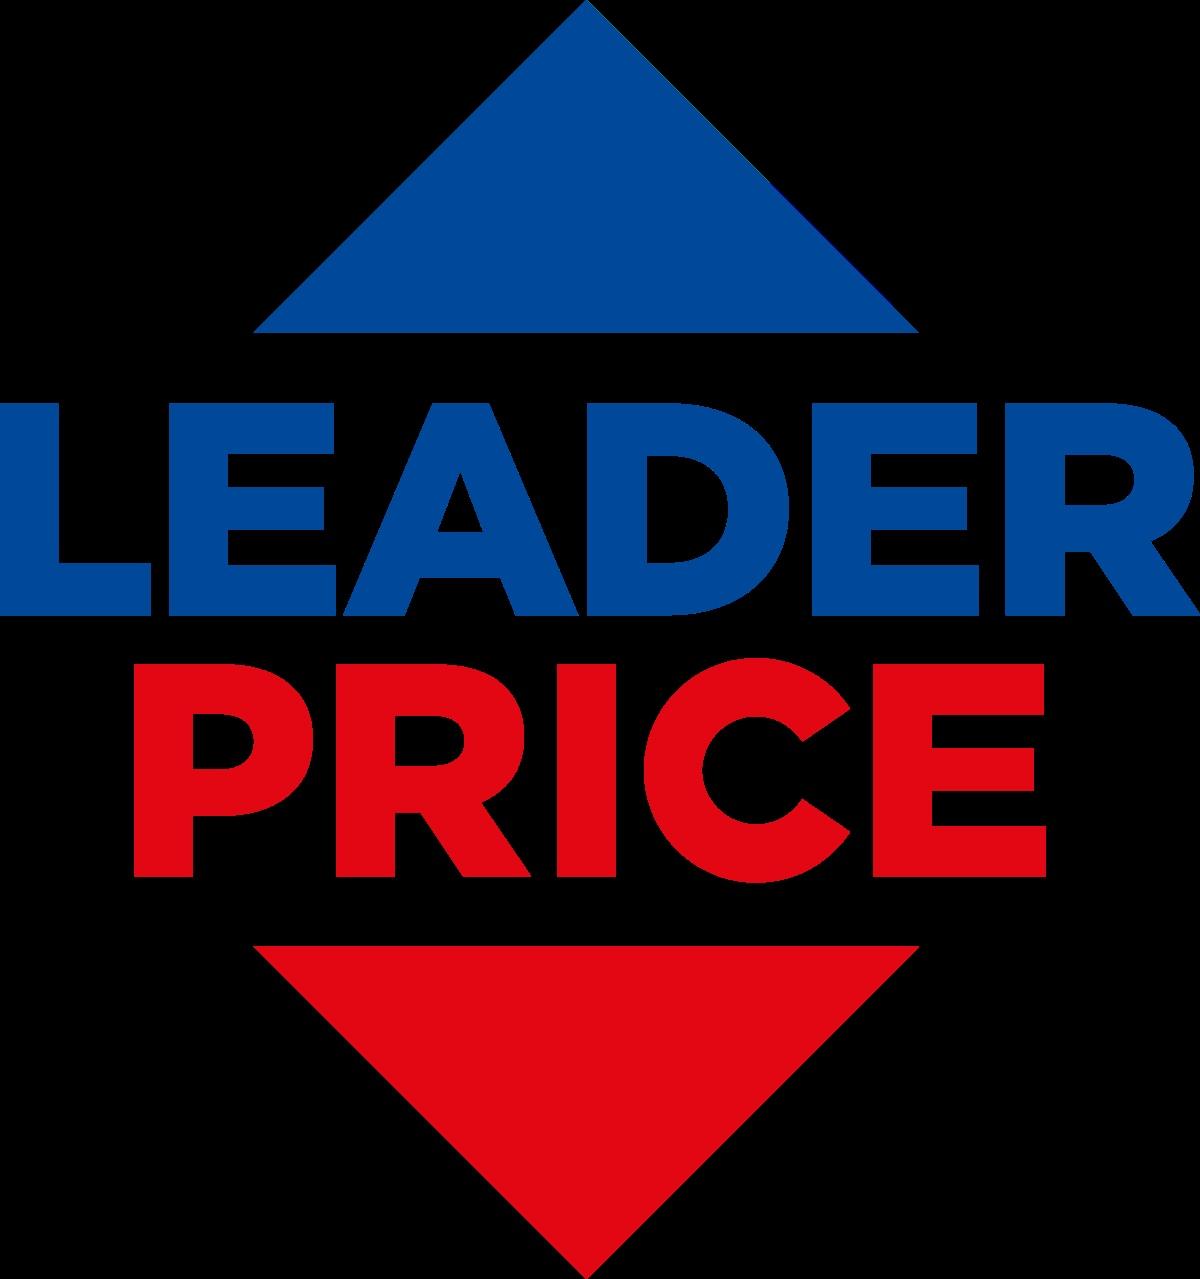 Leader Price Lisieux